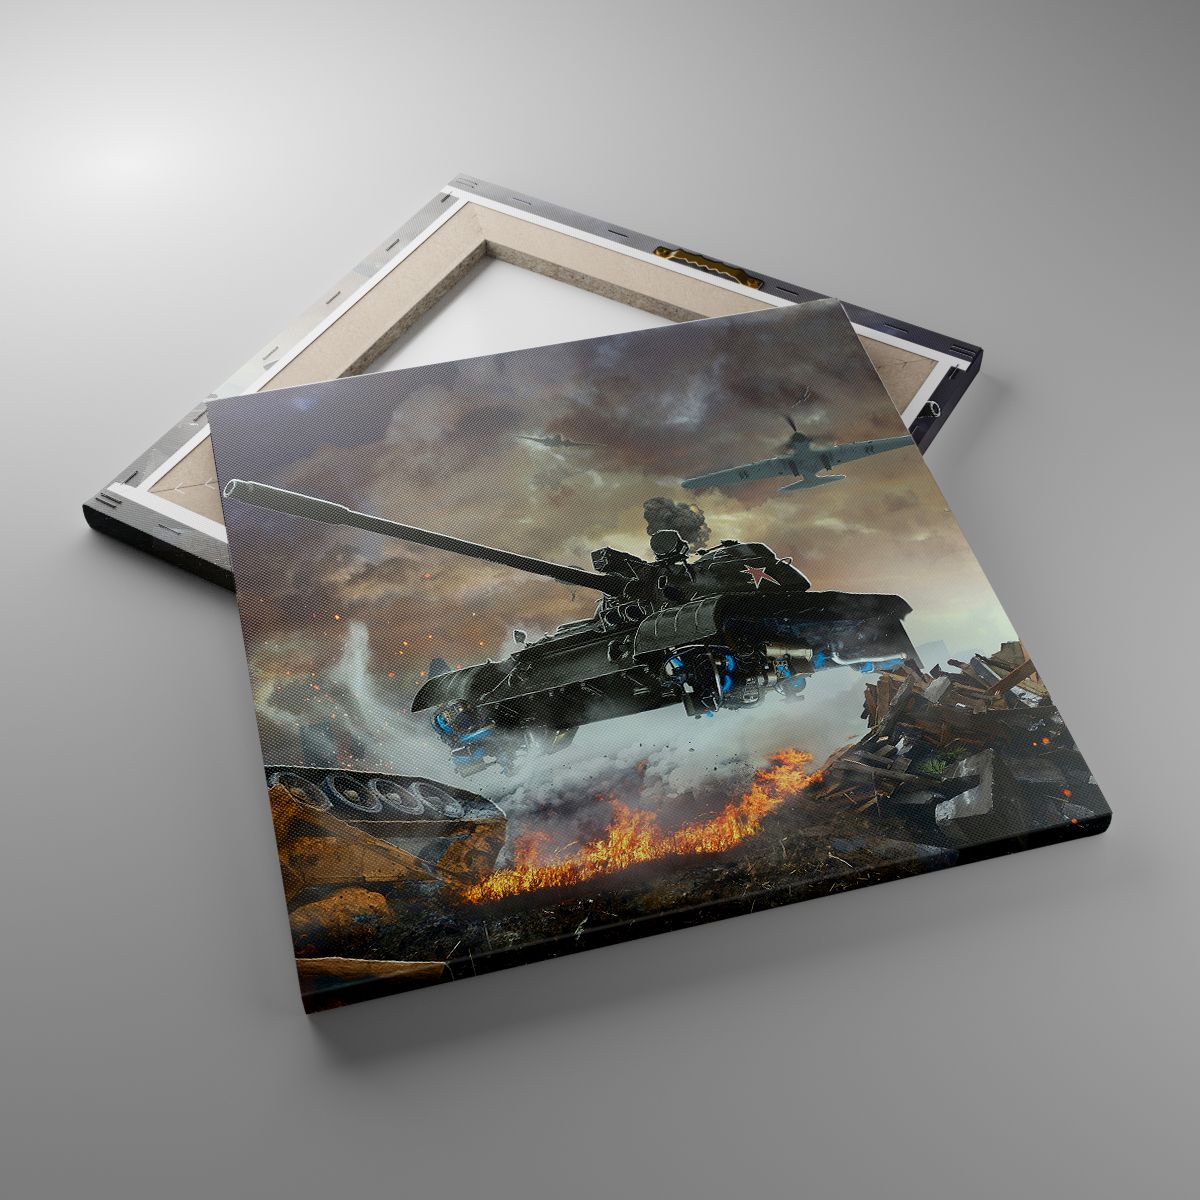 Obrazy Militaria, Obrazy Wojna, Obrazy Czołg, Obrazy Samolot Wojskowy, Obrazy Bitwa